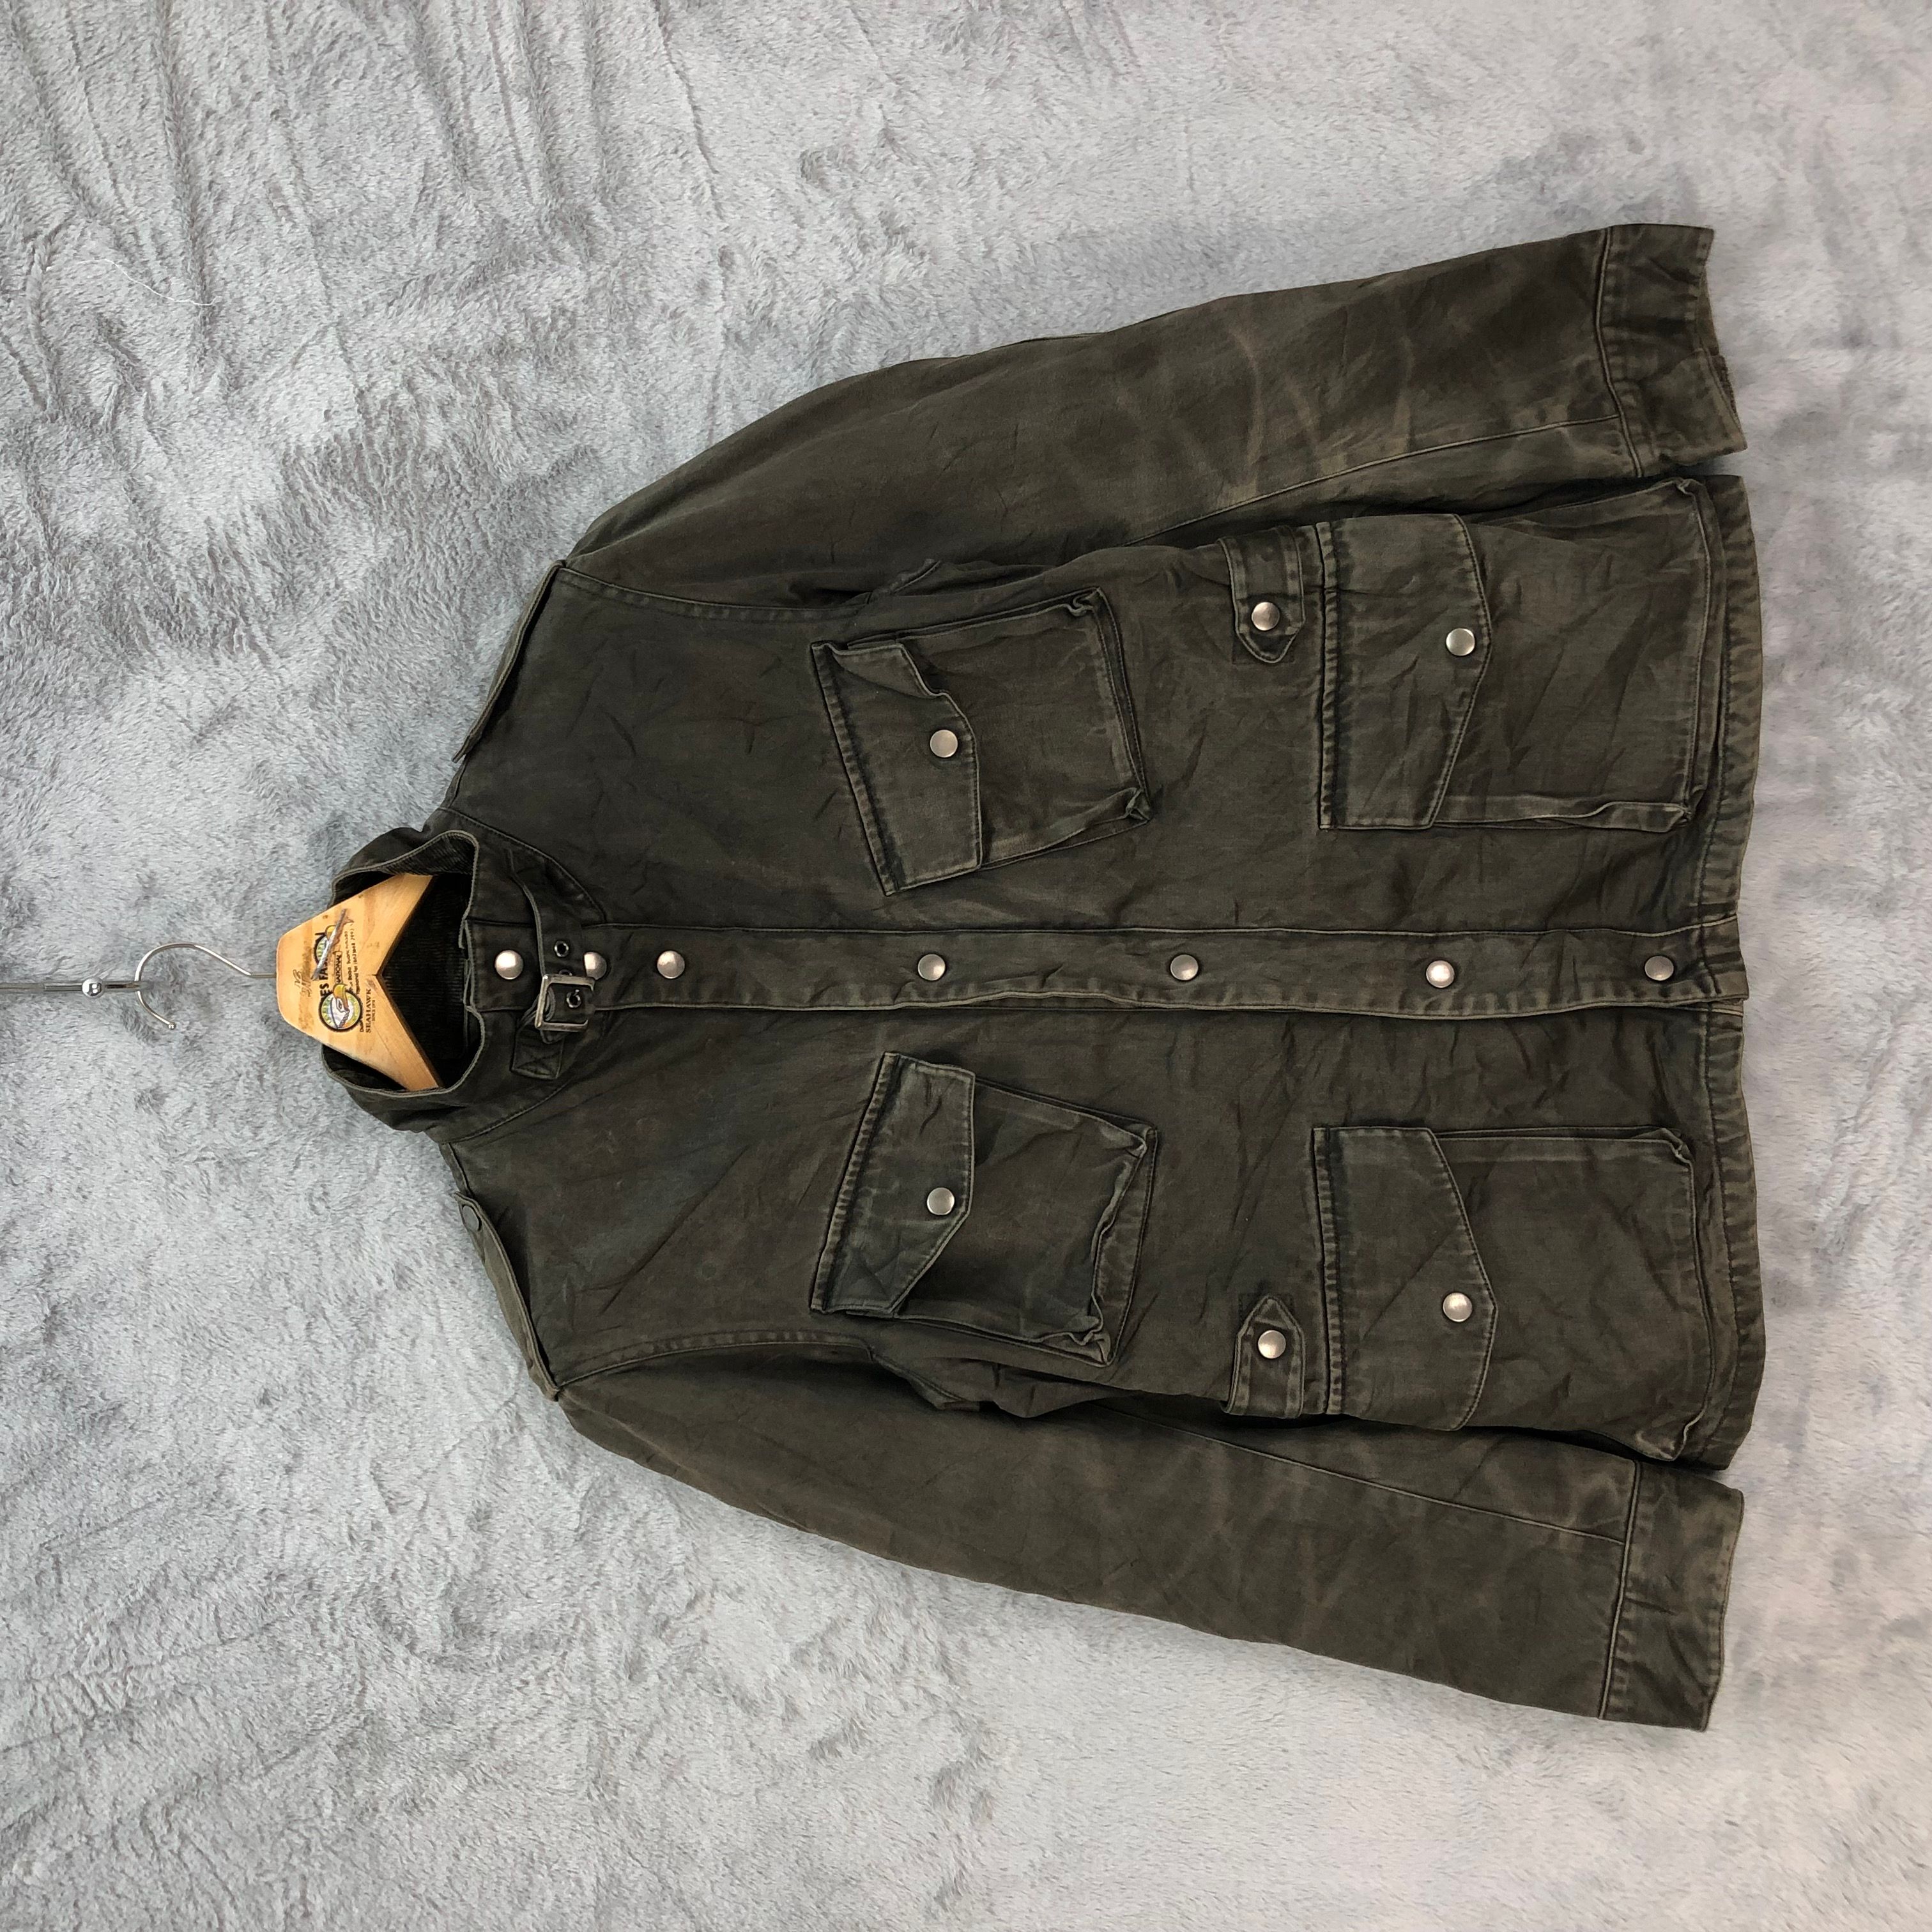 Vintage BEAMS Chore Jacket #4764-167 - 1